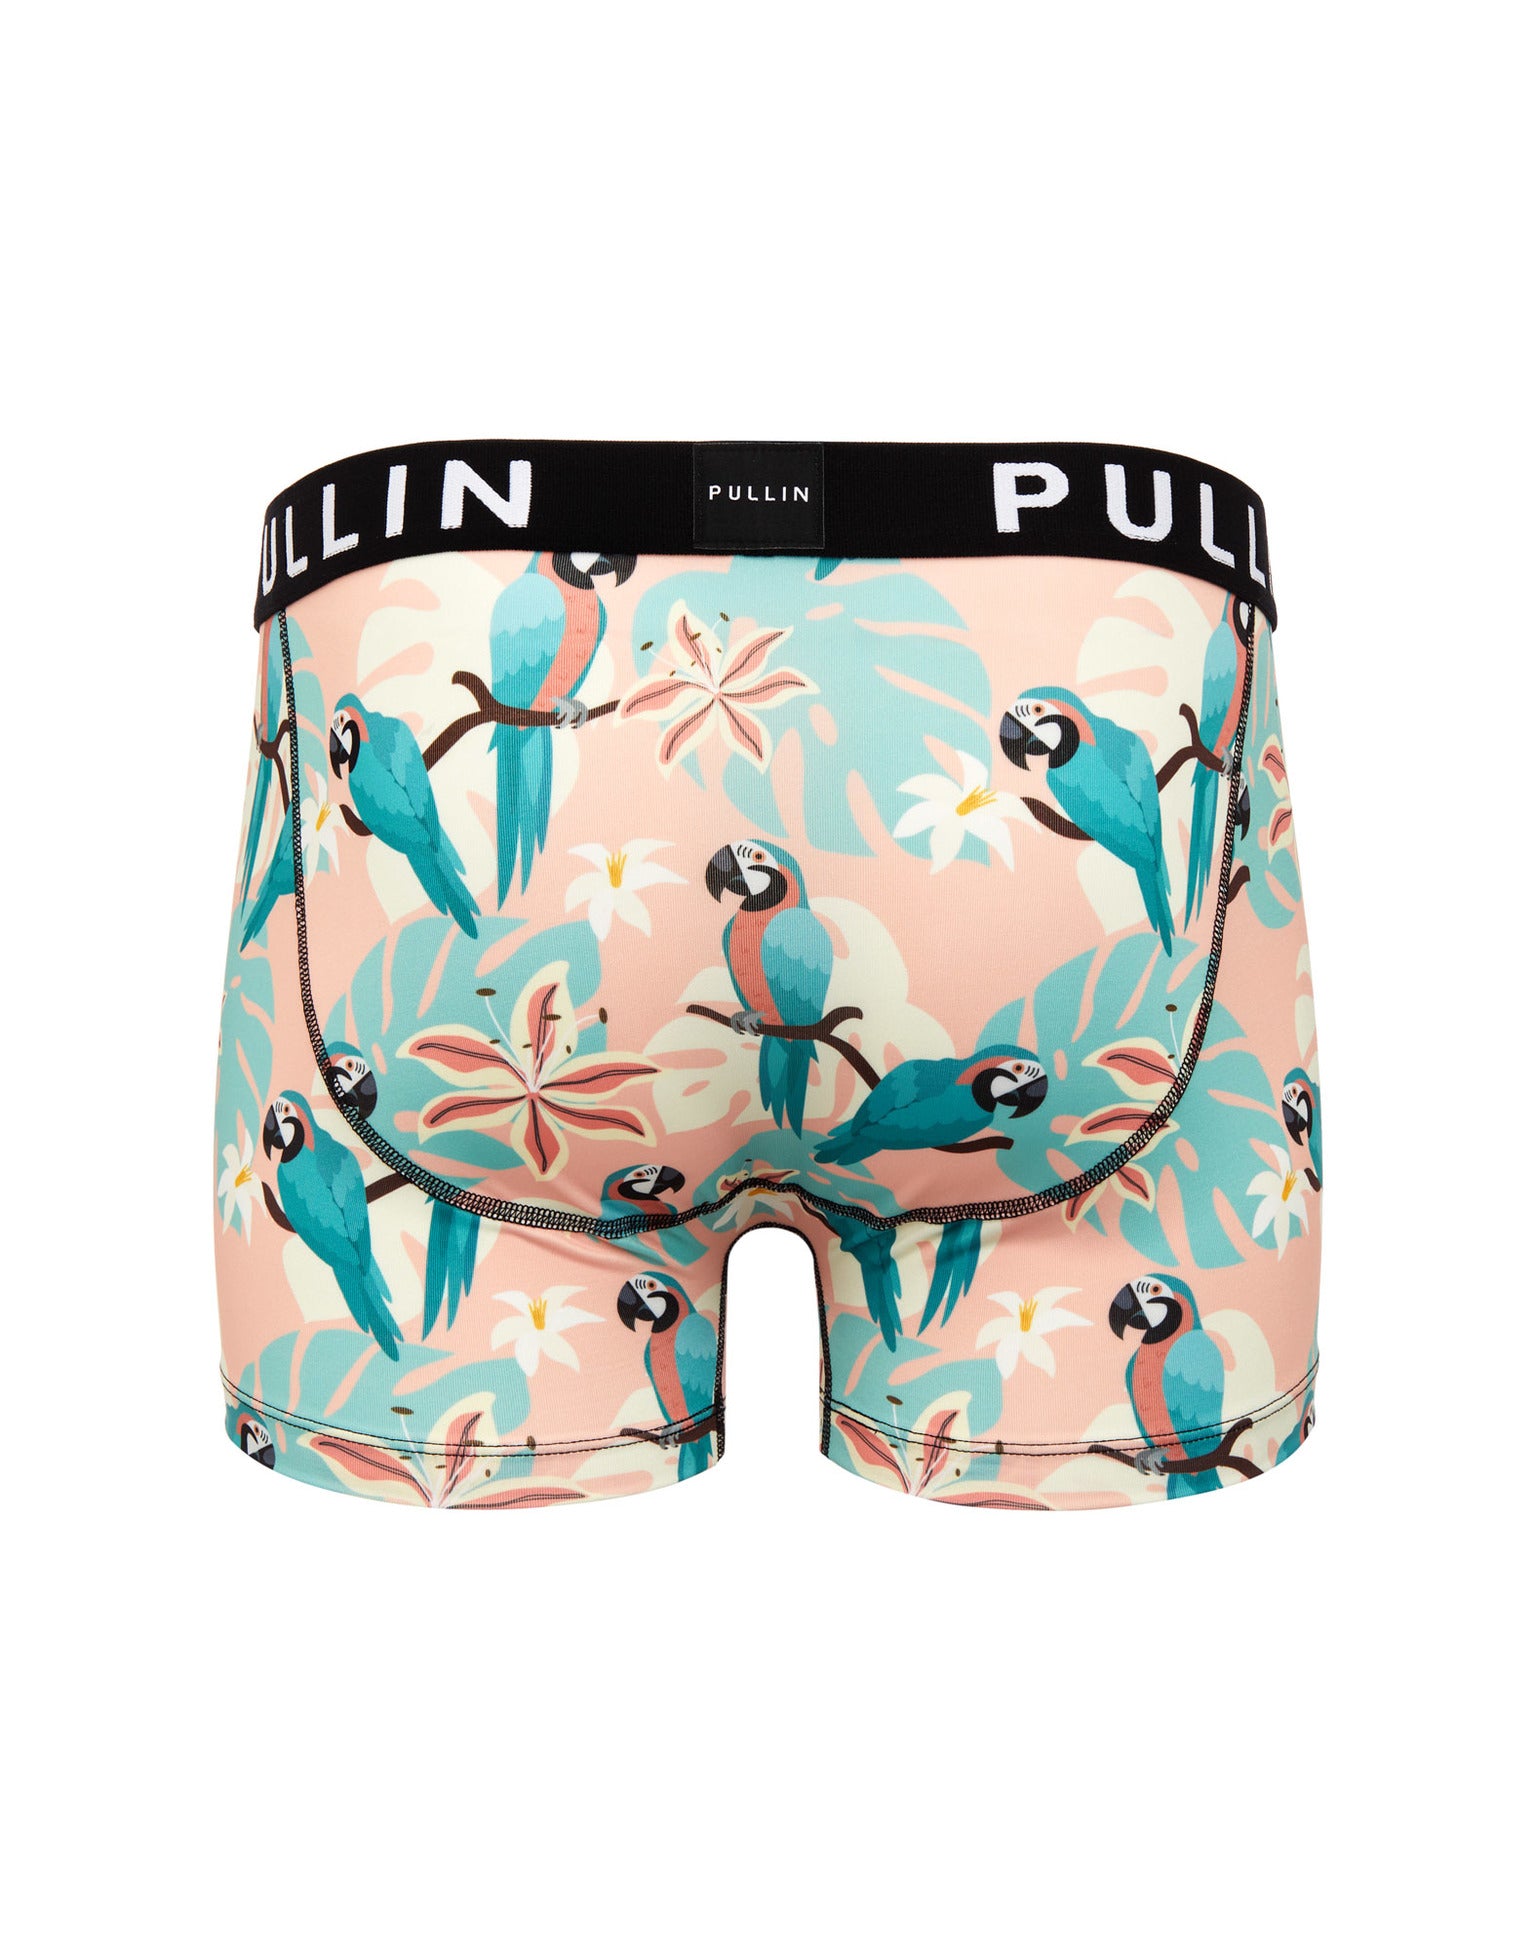 Pullin Men’s Master Parro Dise parrot 🦜 print Underwear